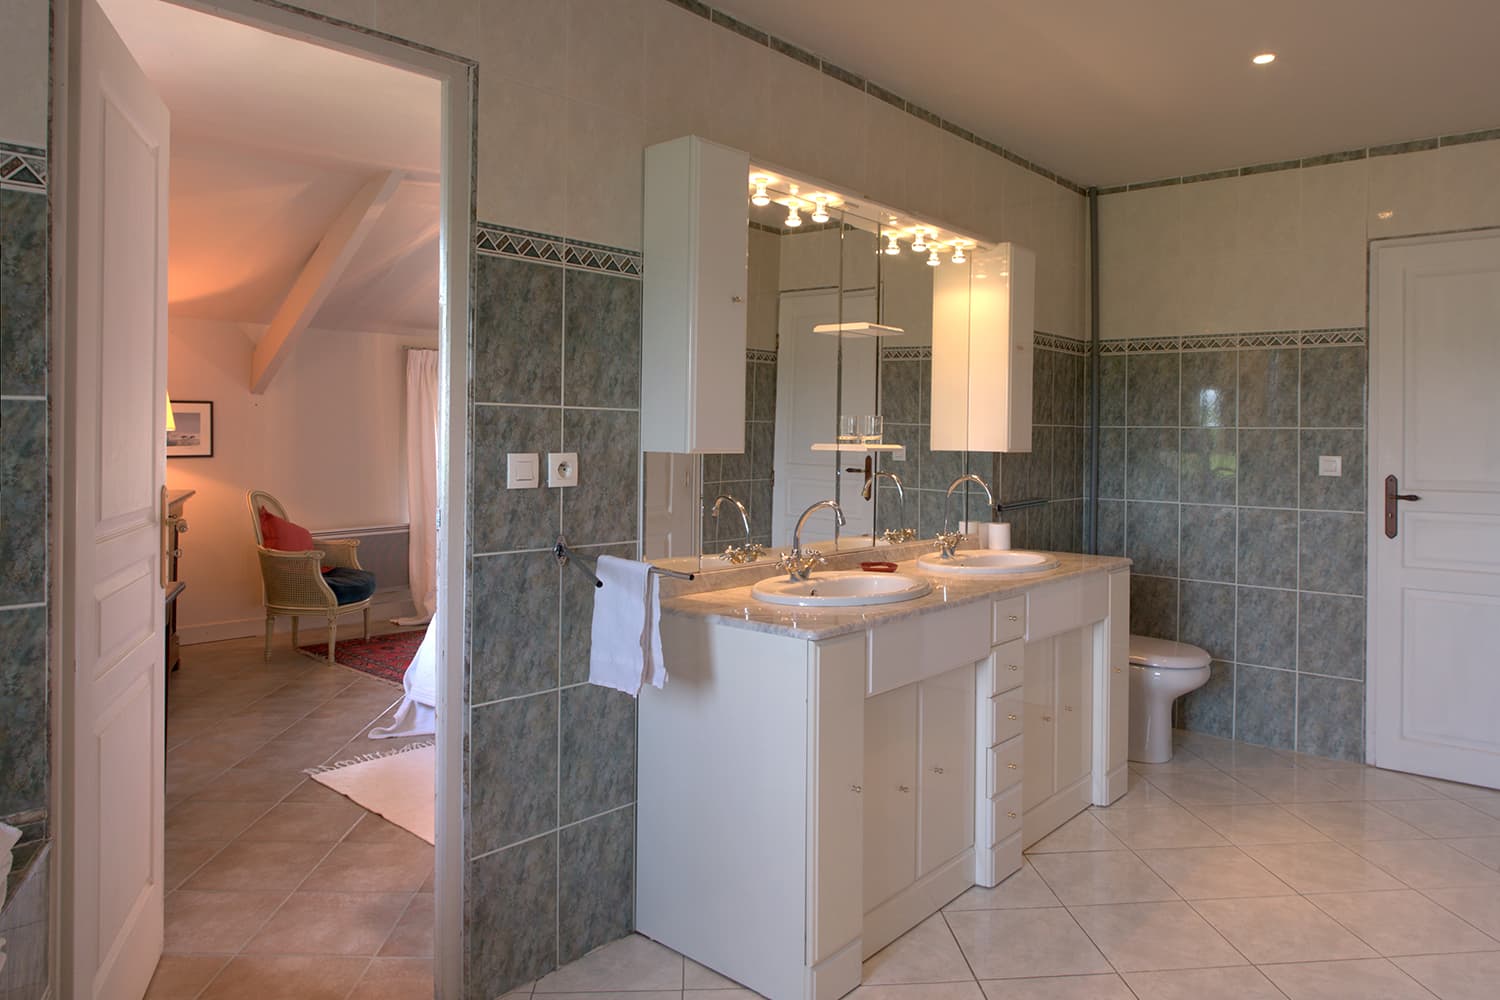 Bathroom | South West France rental home